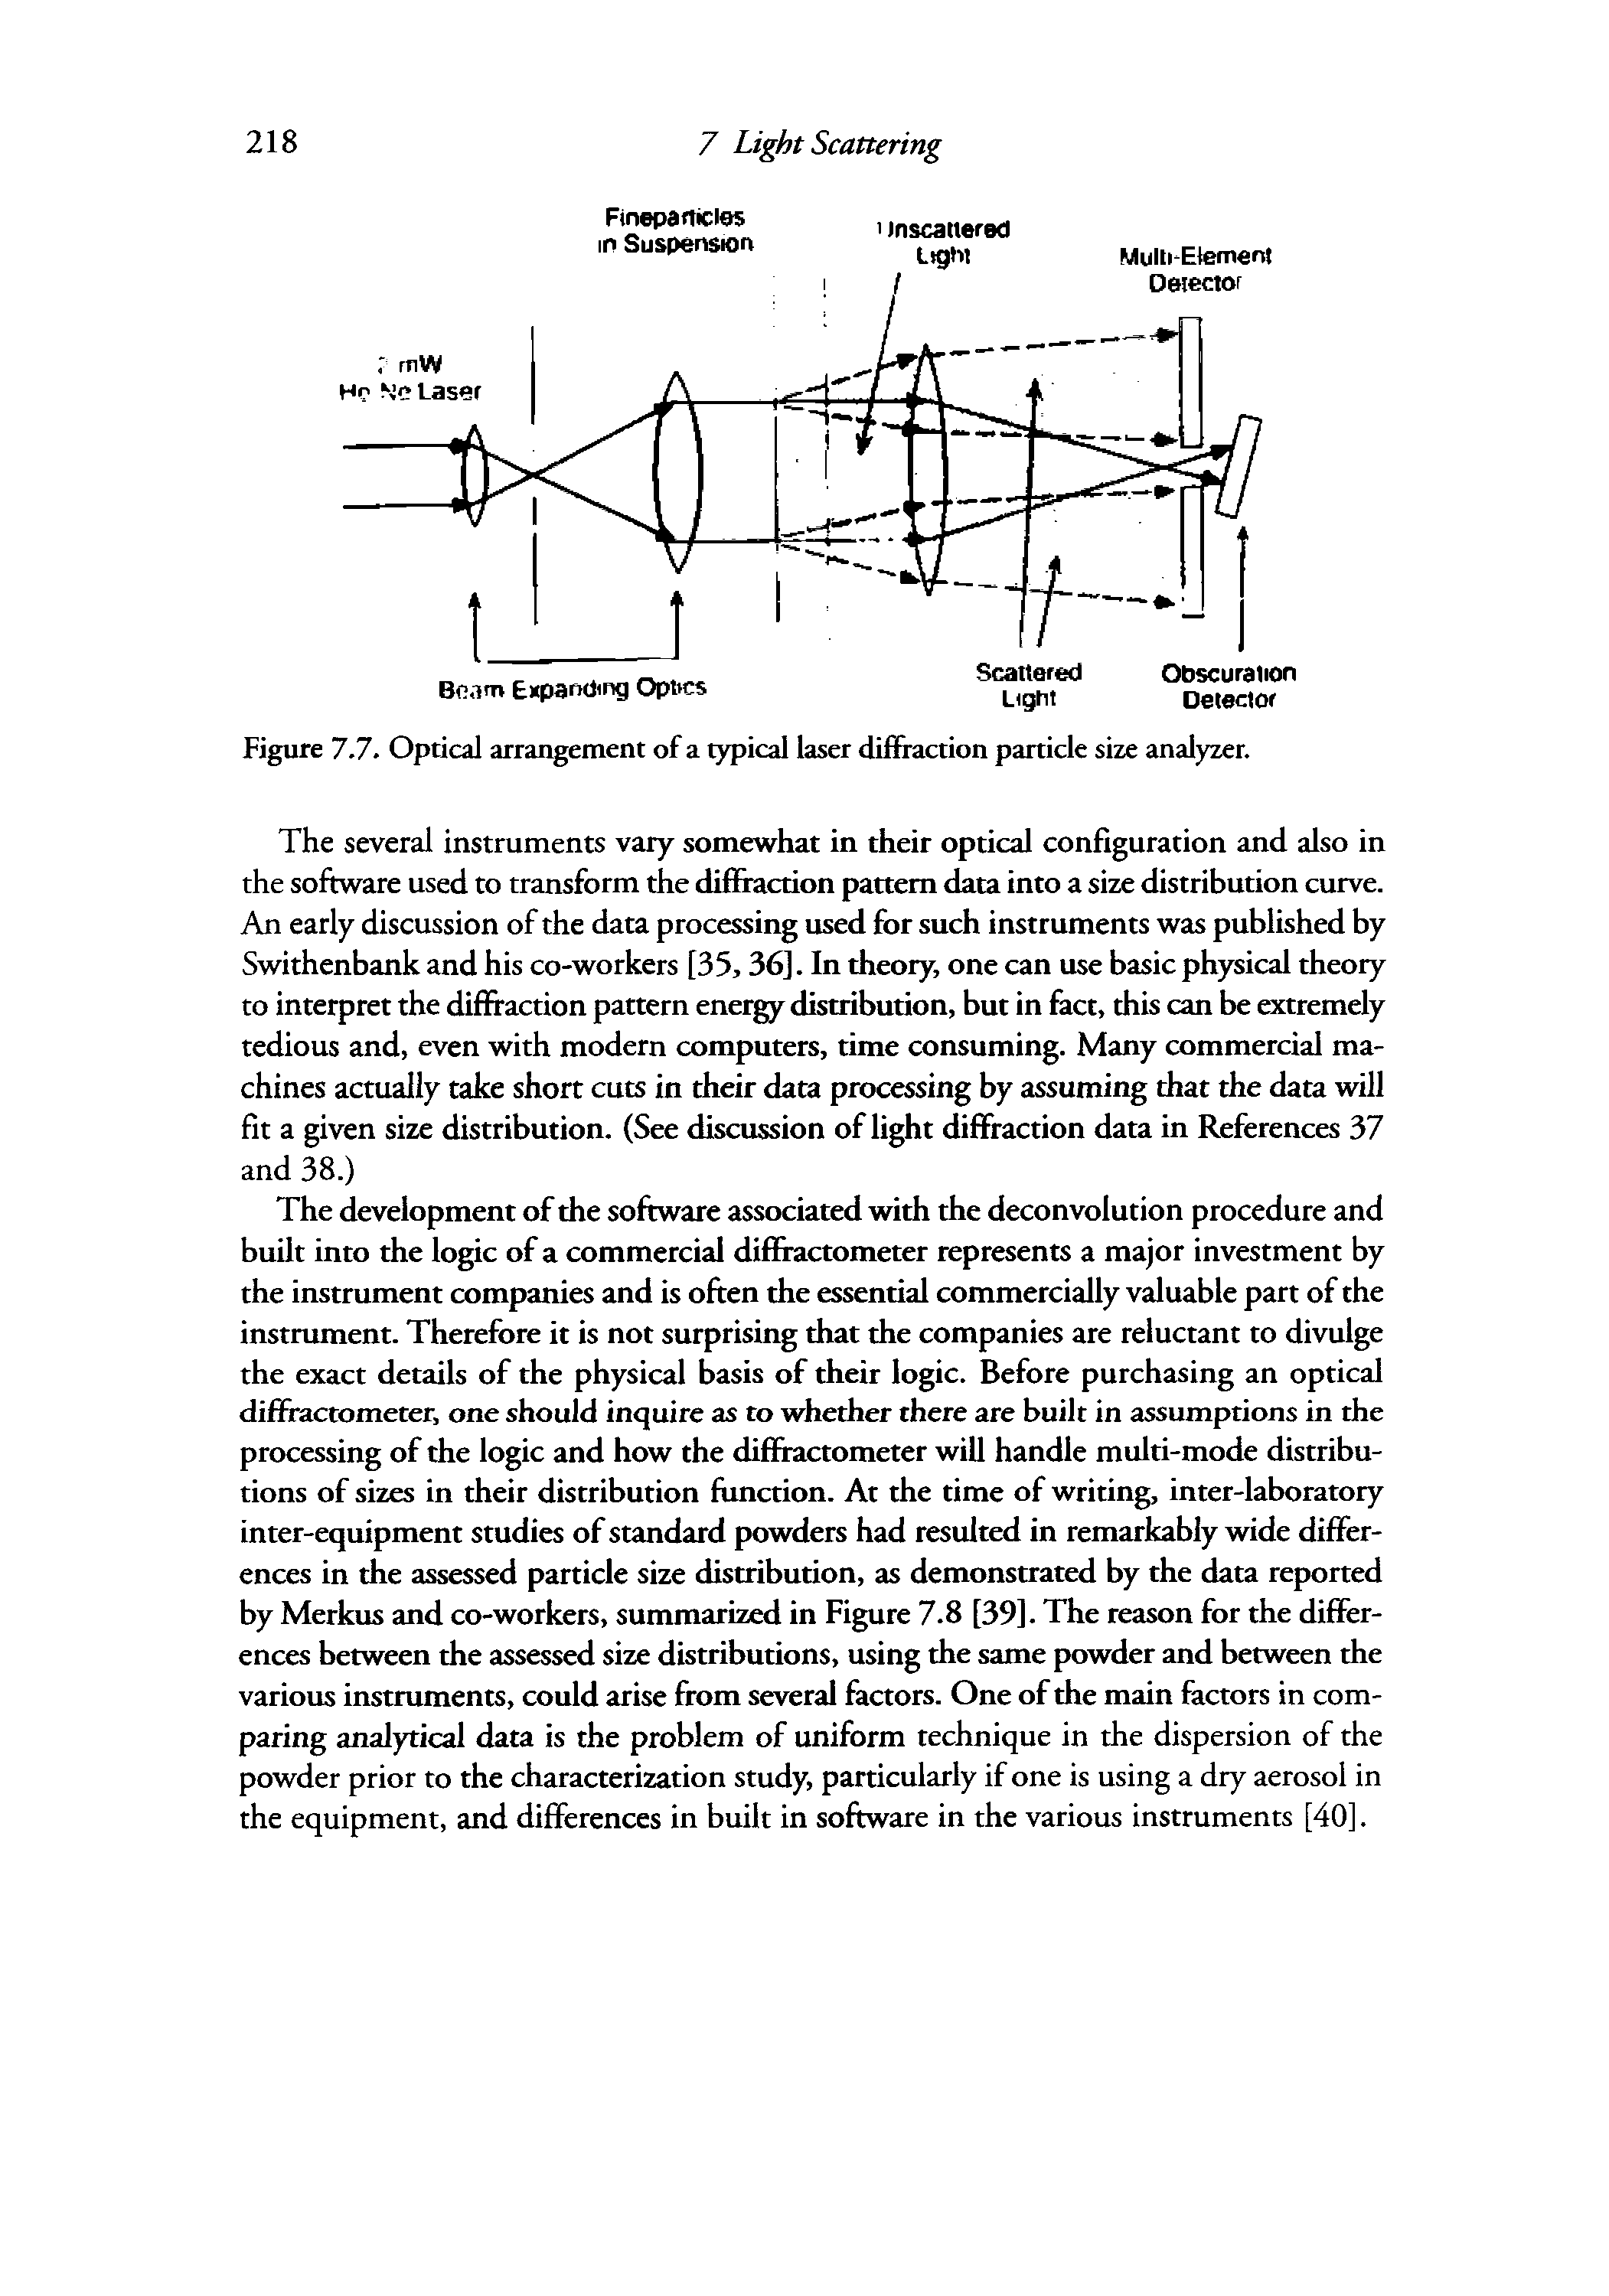 Figure 7.7. Optical arrangement of a typical laser diffraction particle size analyzer.